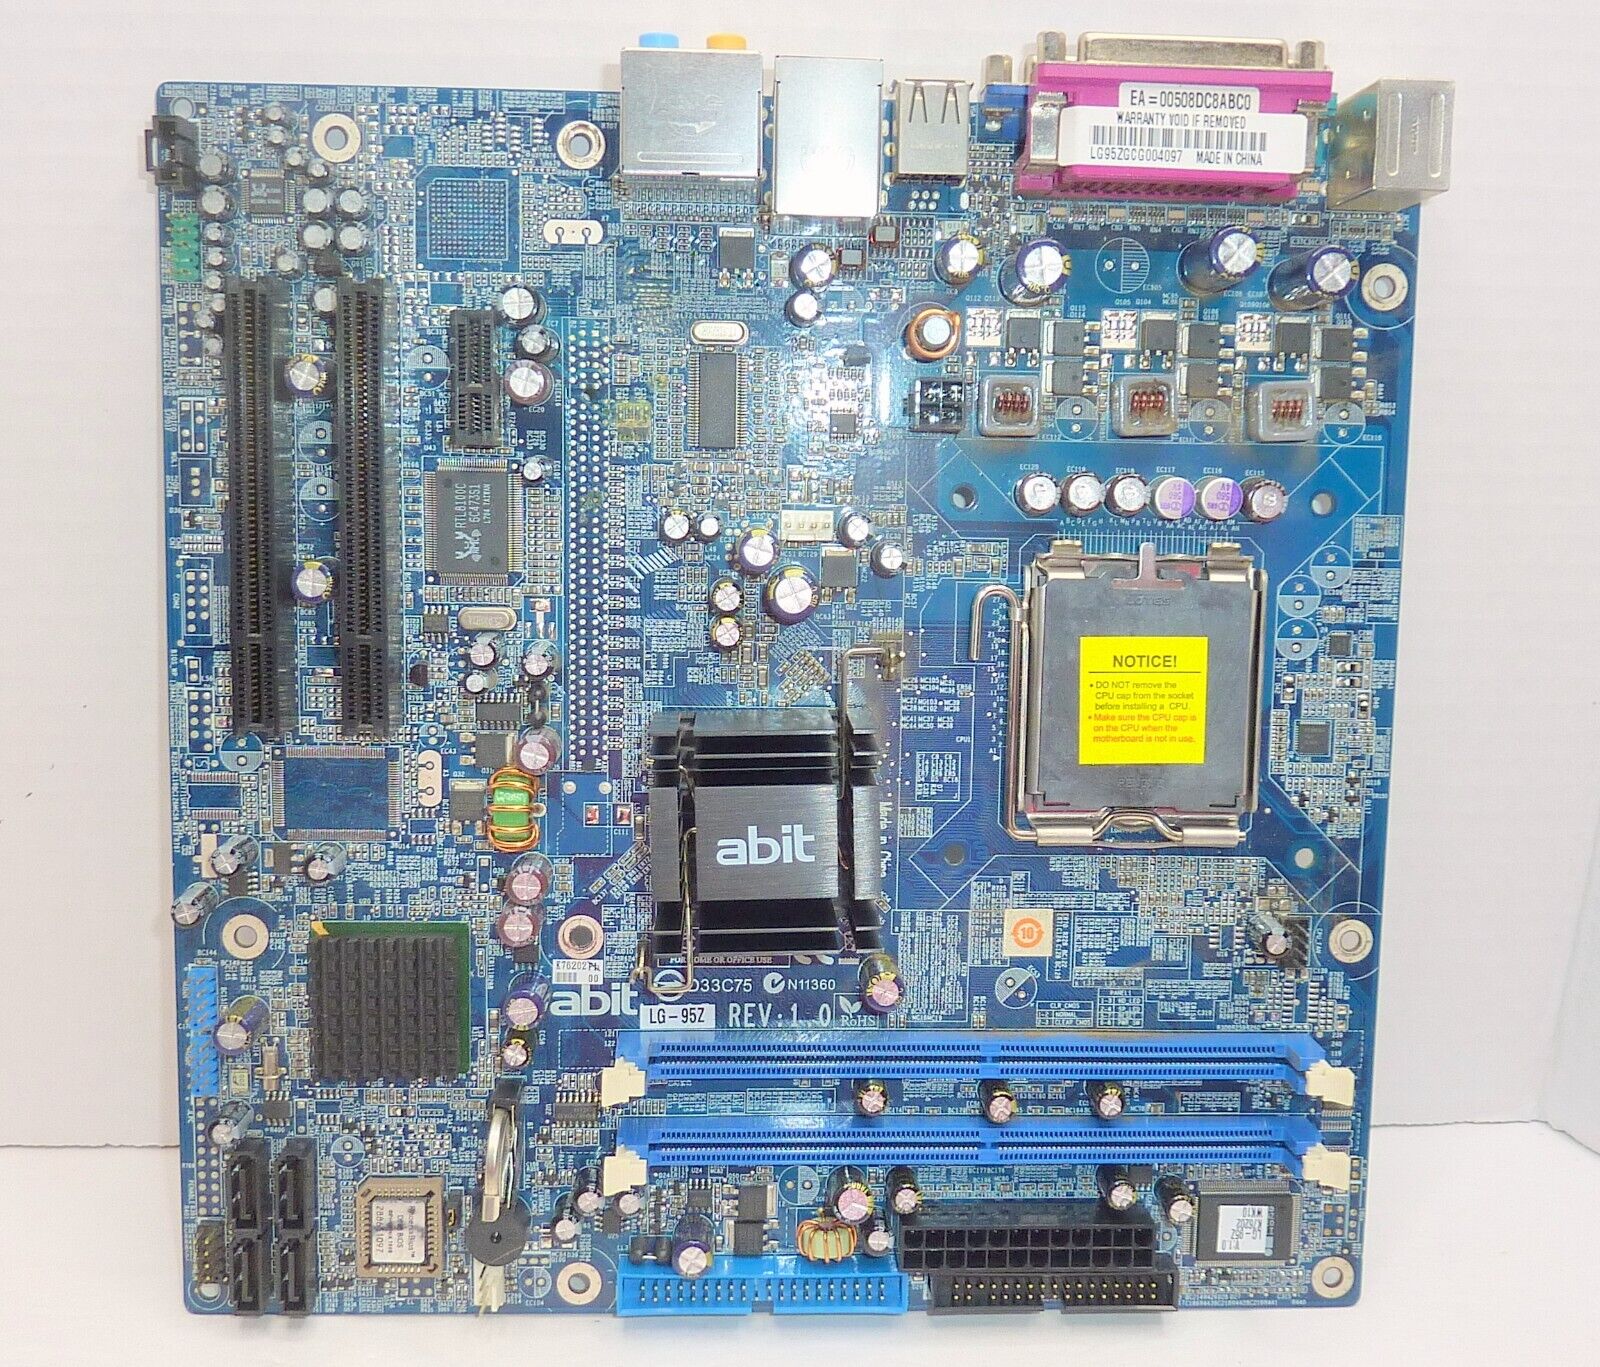 Intel 945GZ  Excellent  Micro ATX Motherboard  ABIT LG-95Z LGA 775 See Photos